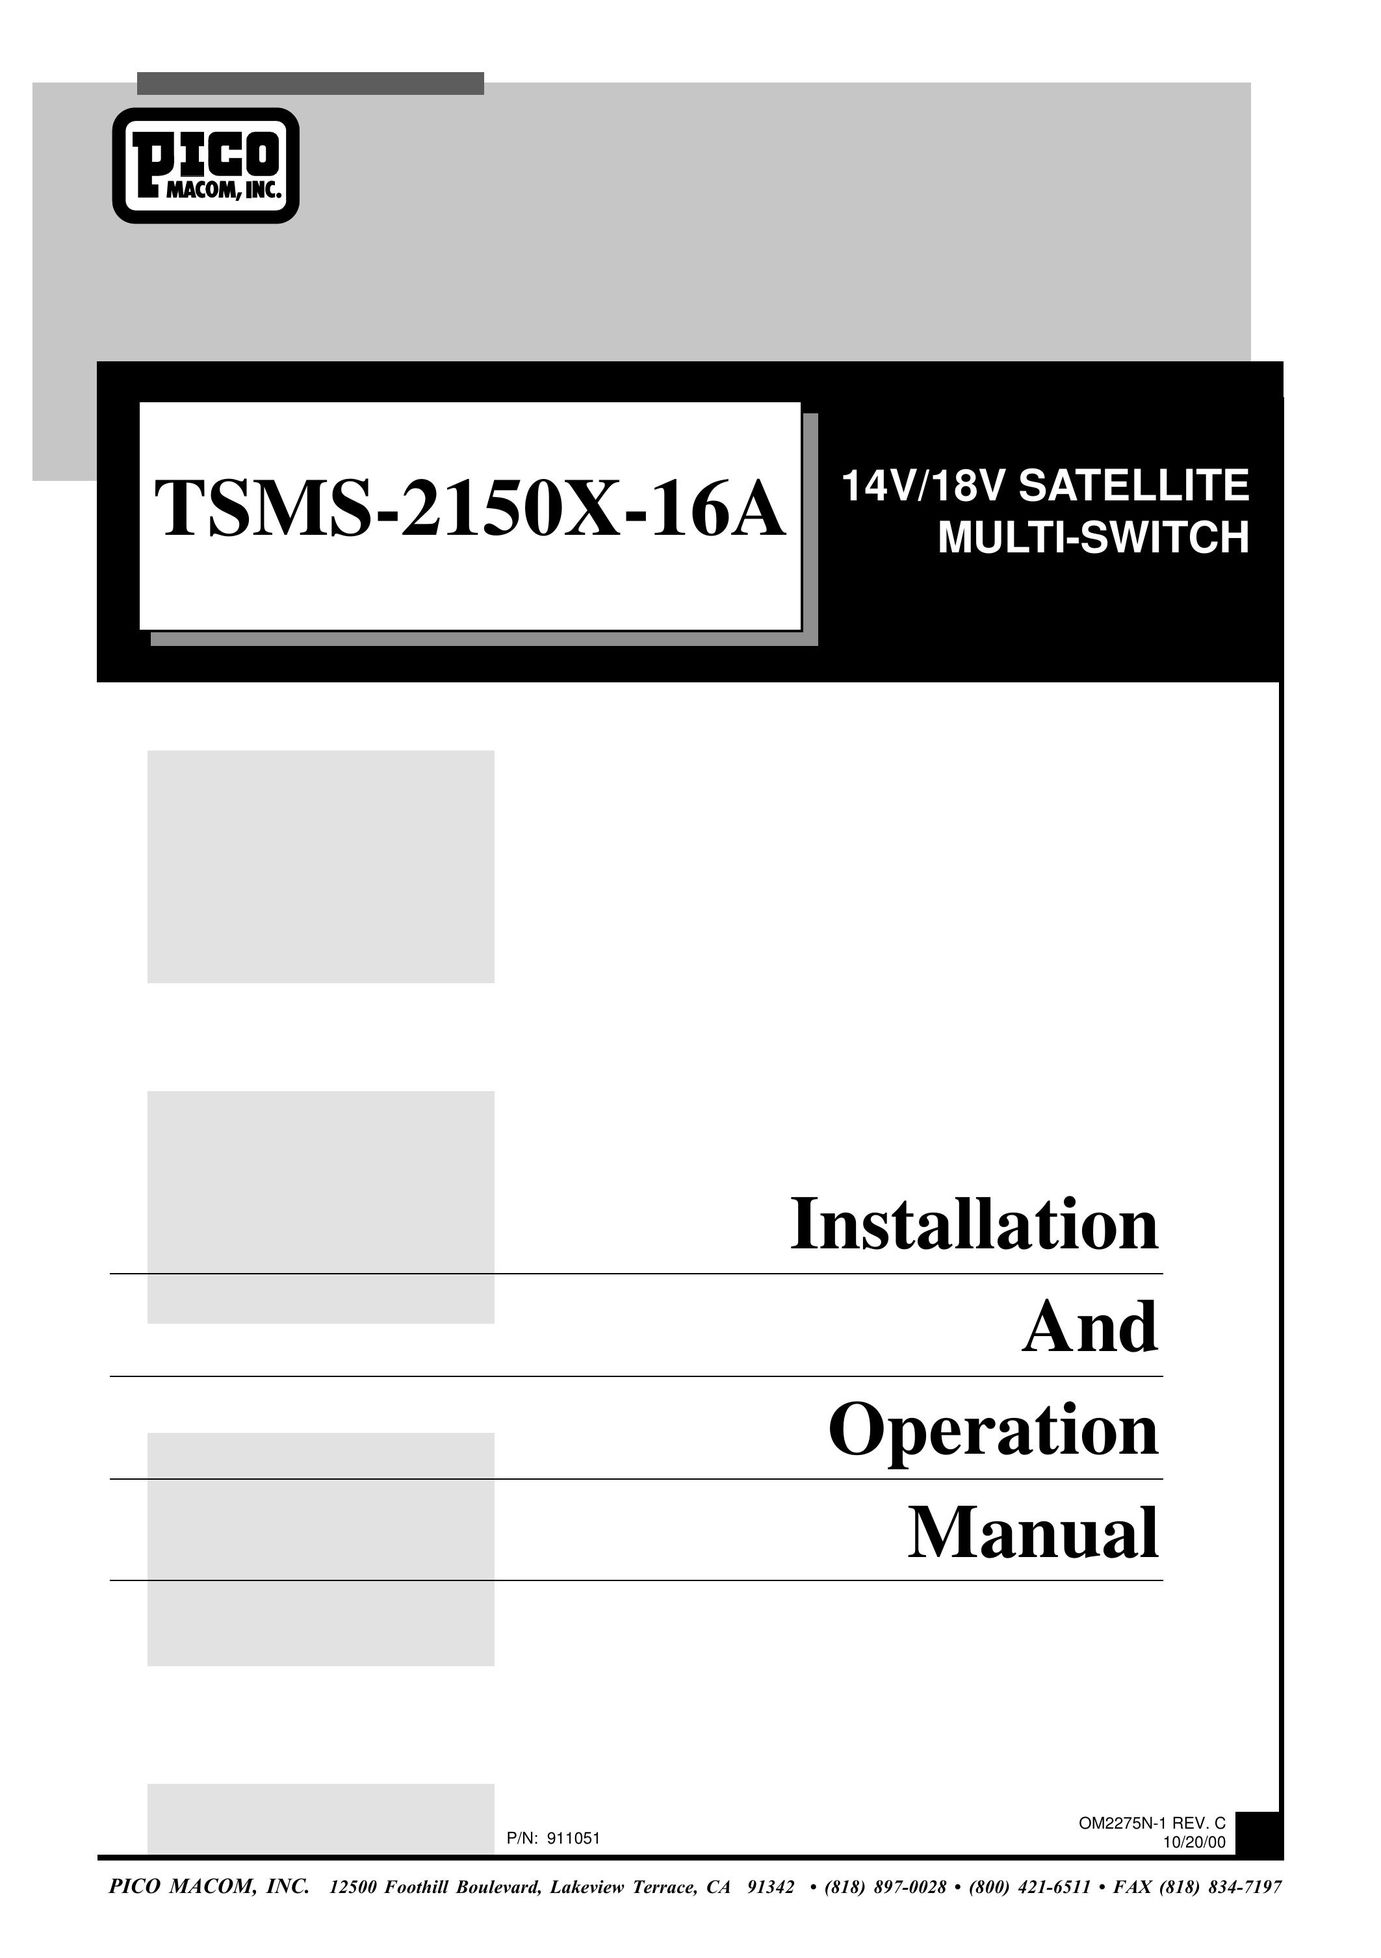 Pico Macom TSMS-2150X Switch User Manual